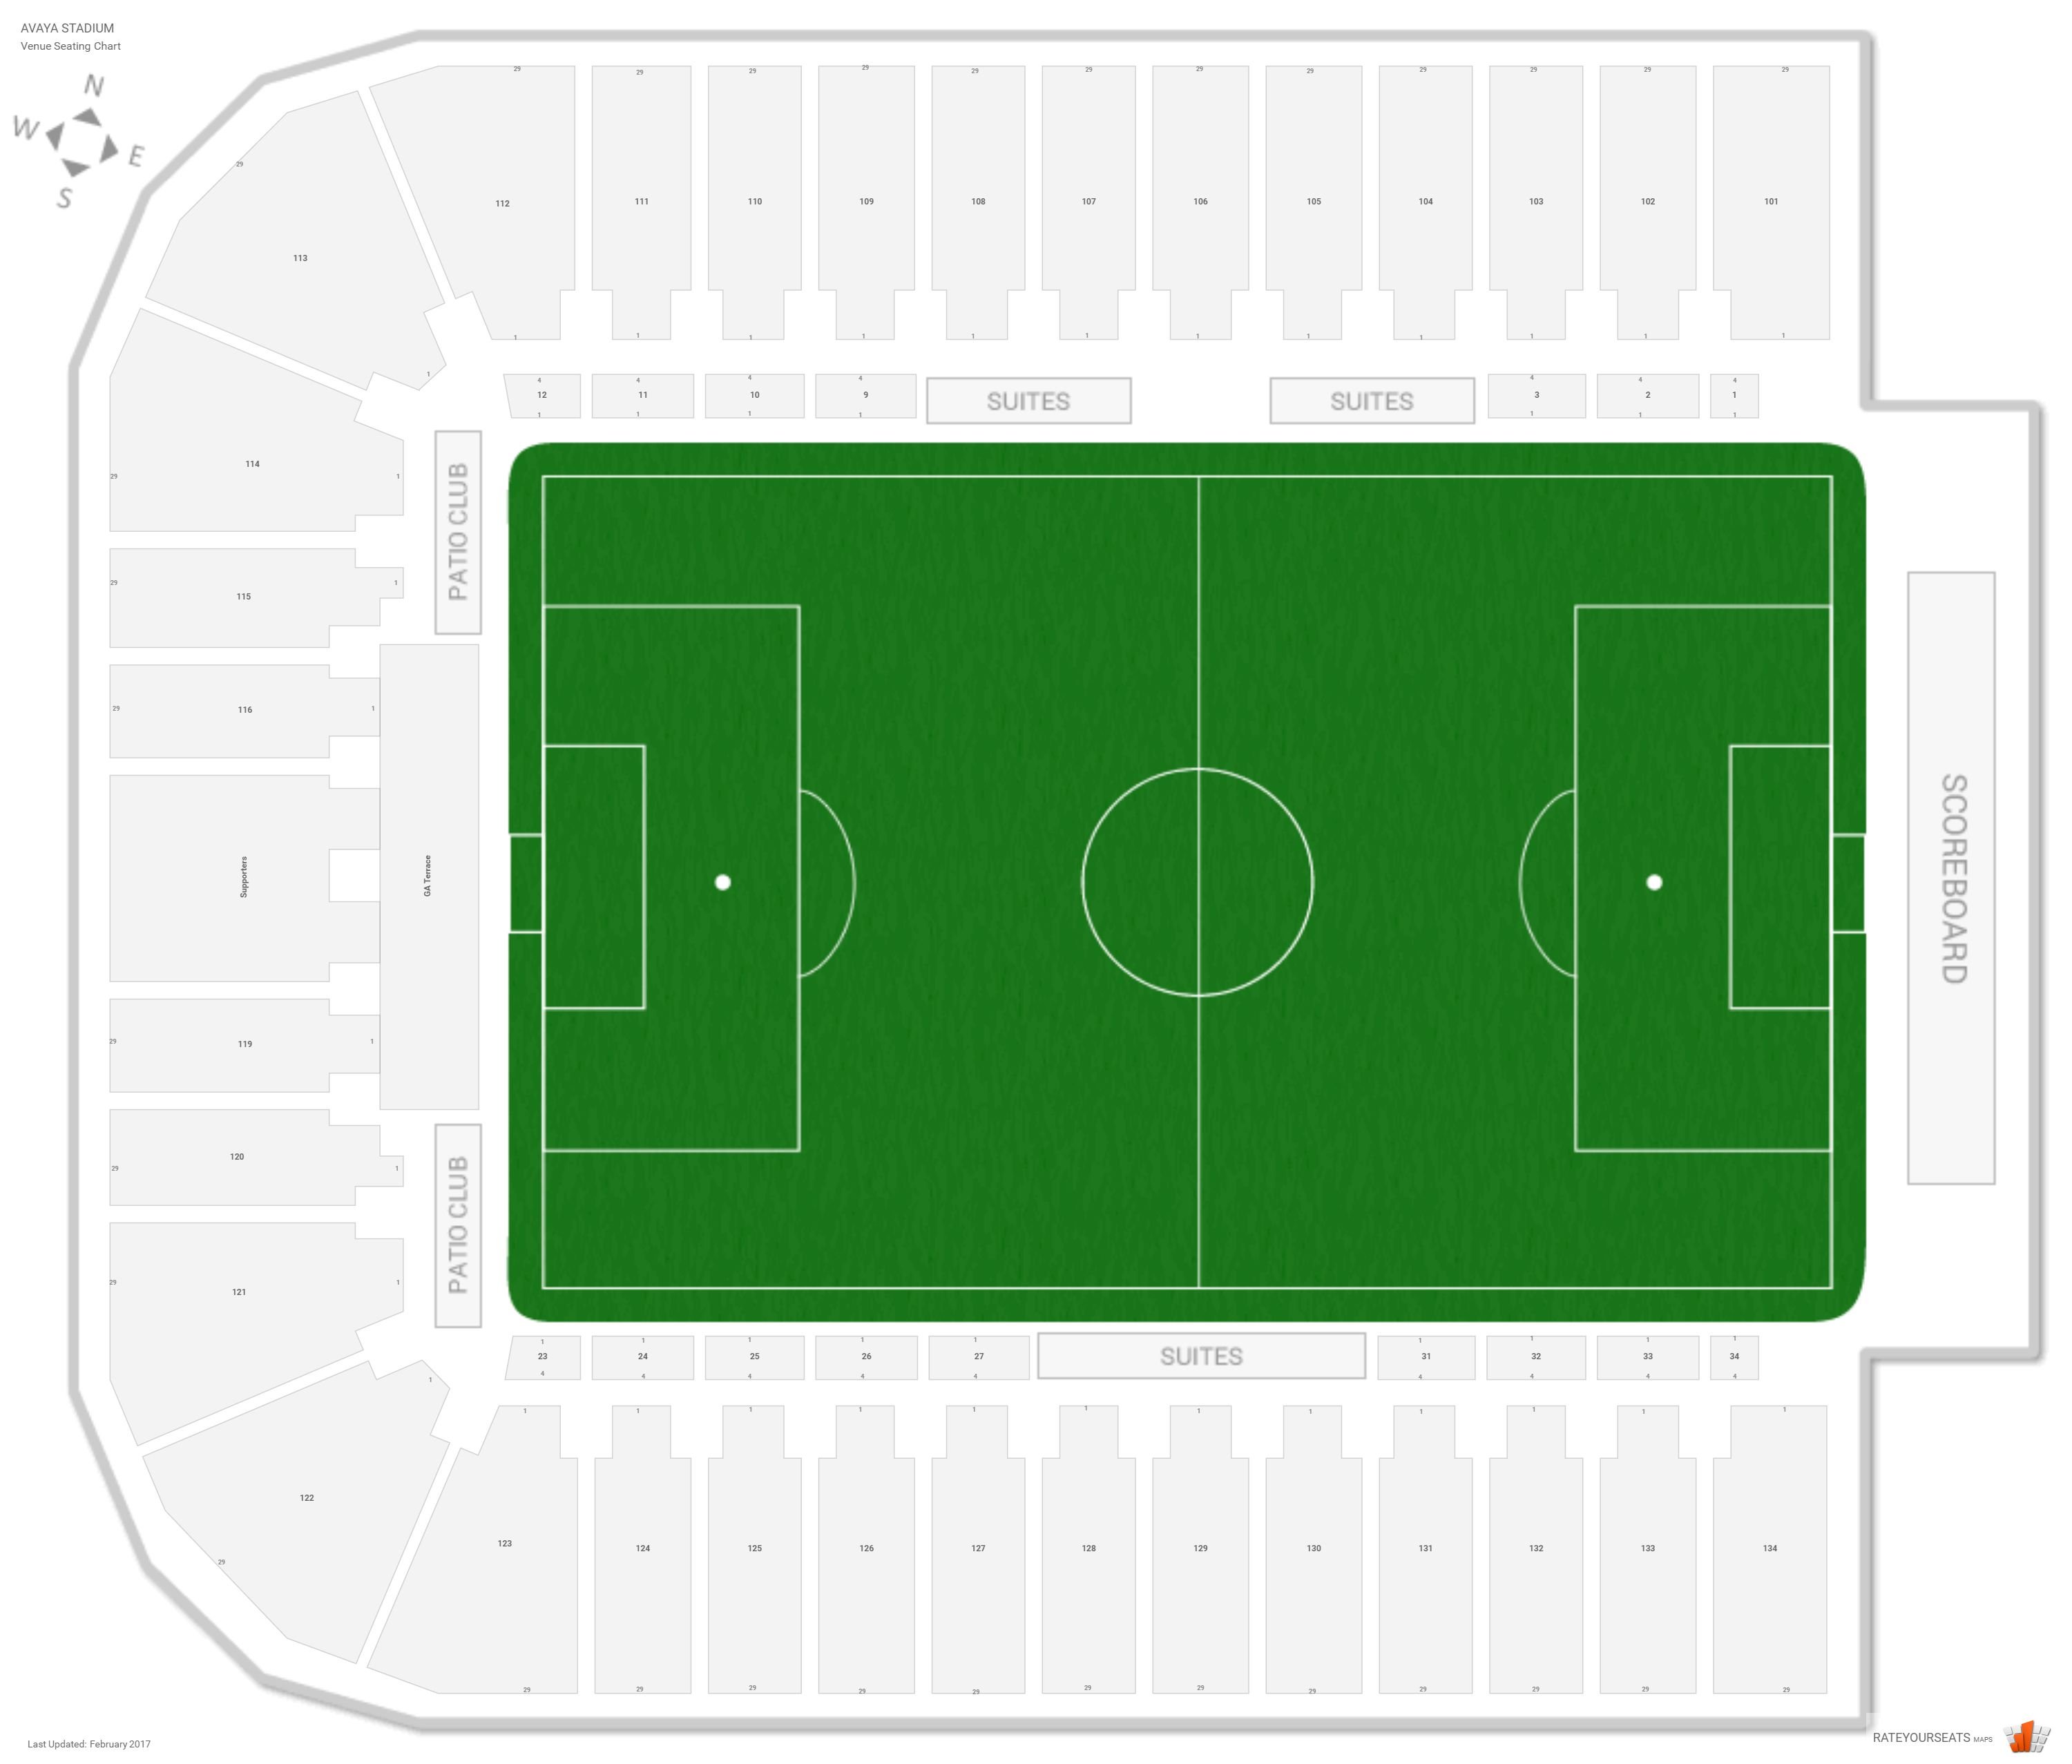 Avaya Stadium Seating Chart 3d